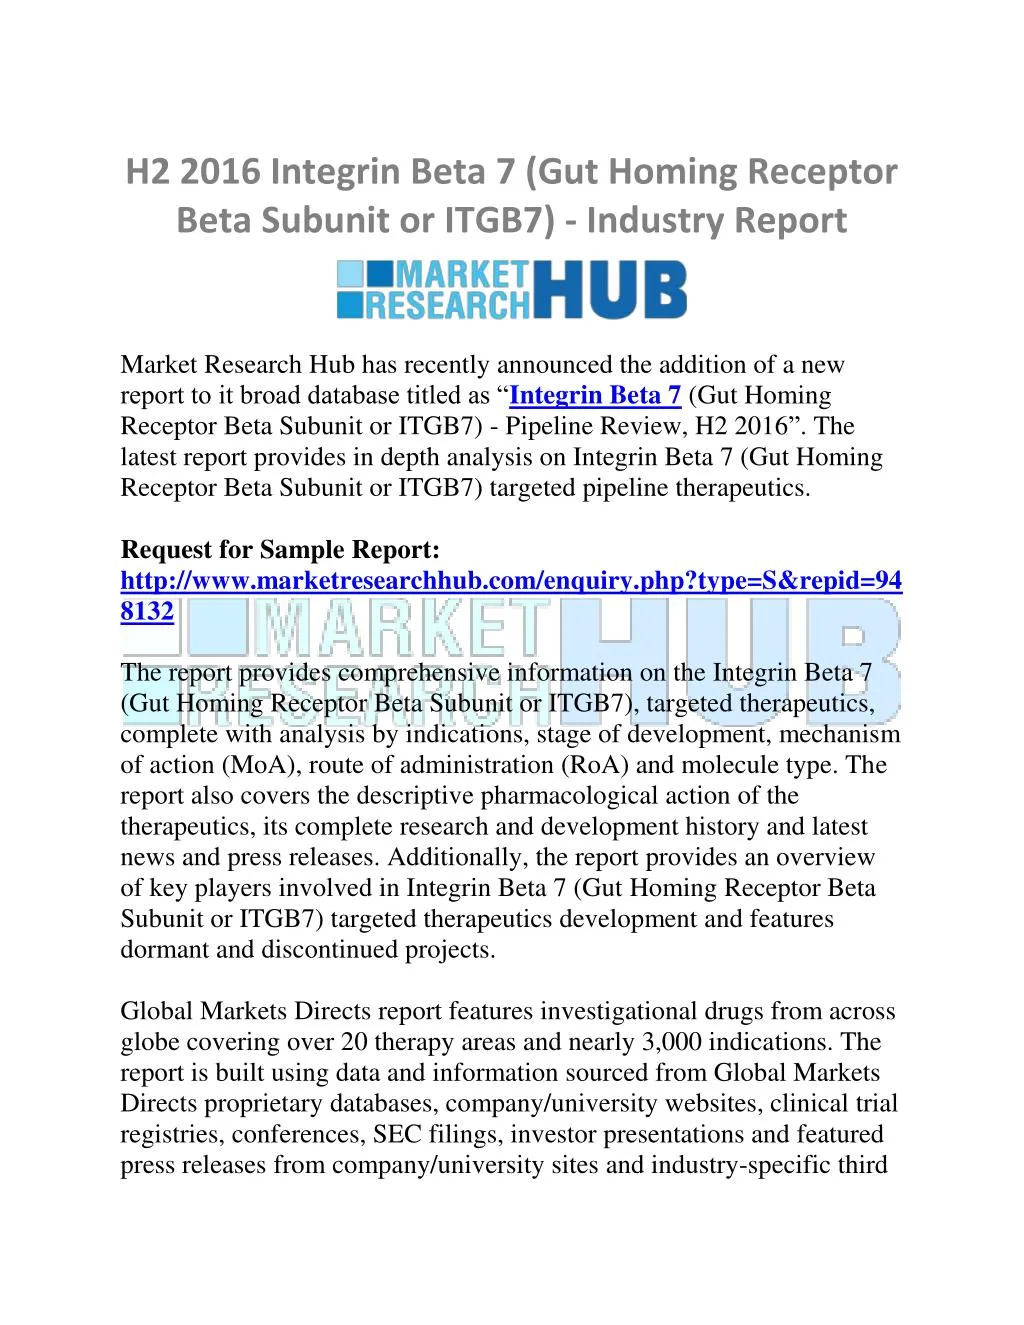 h2 2016 integrin beta 7 gut homing receptor beta